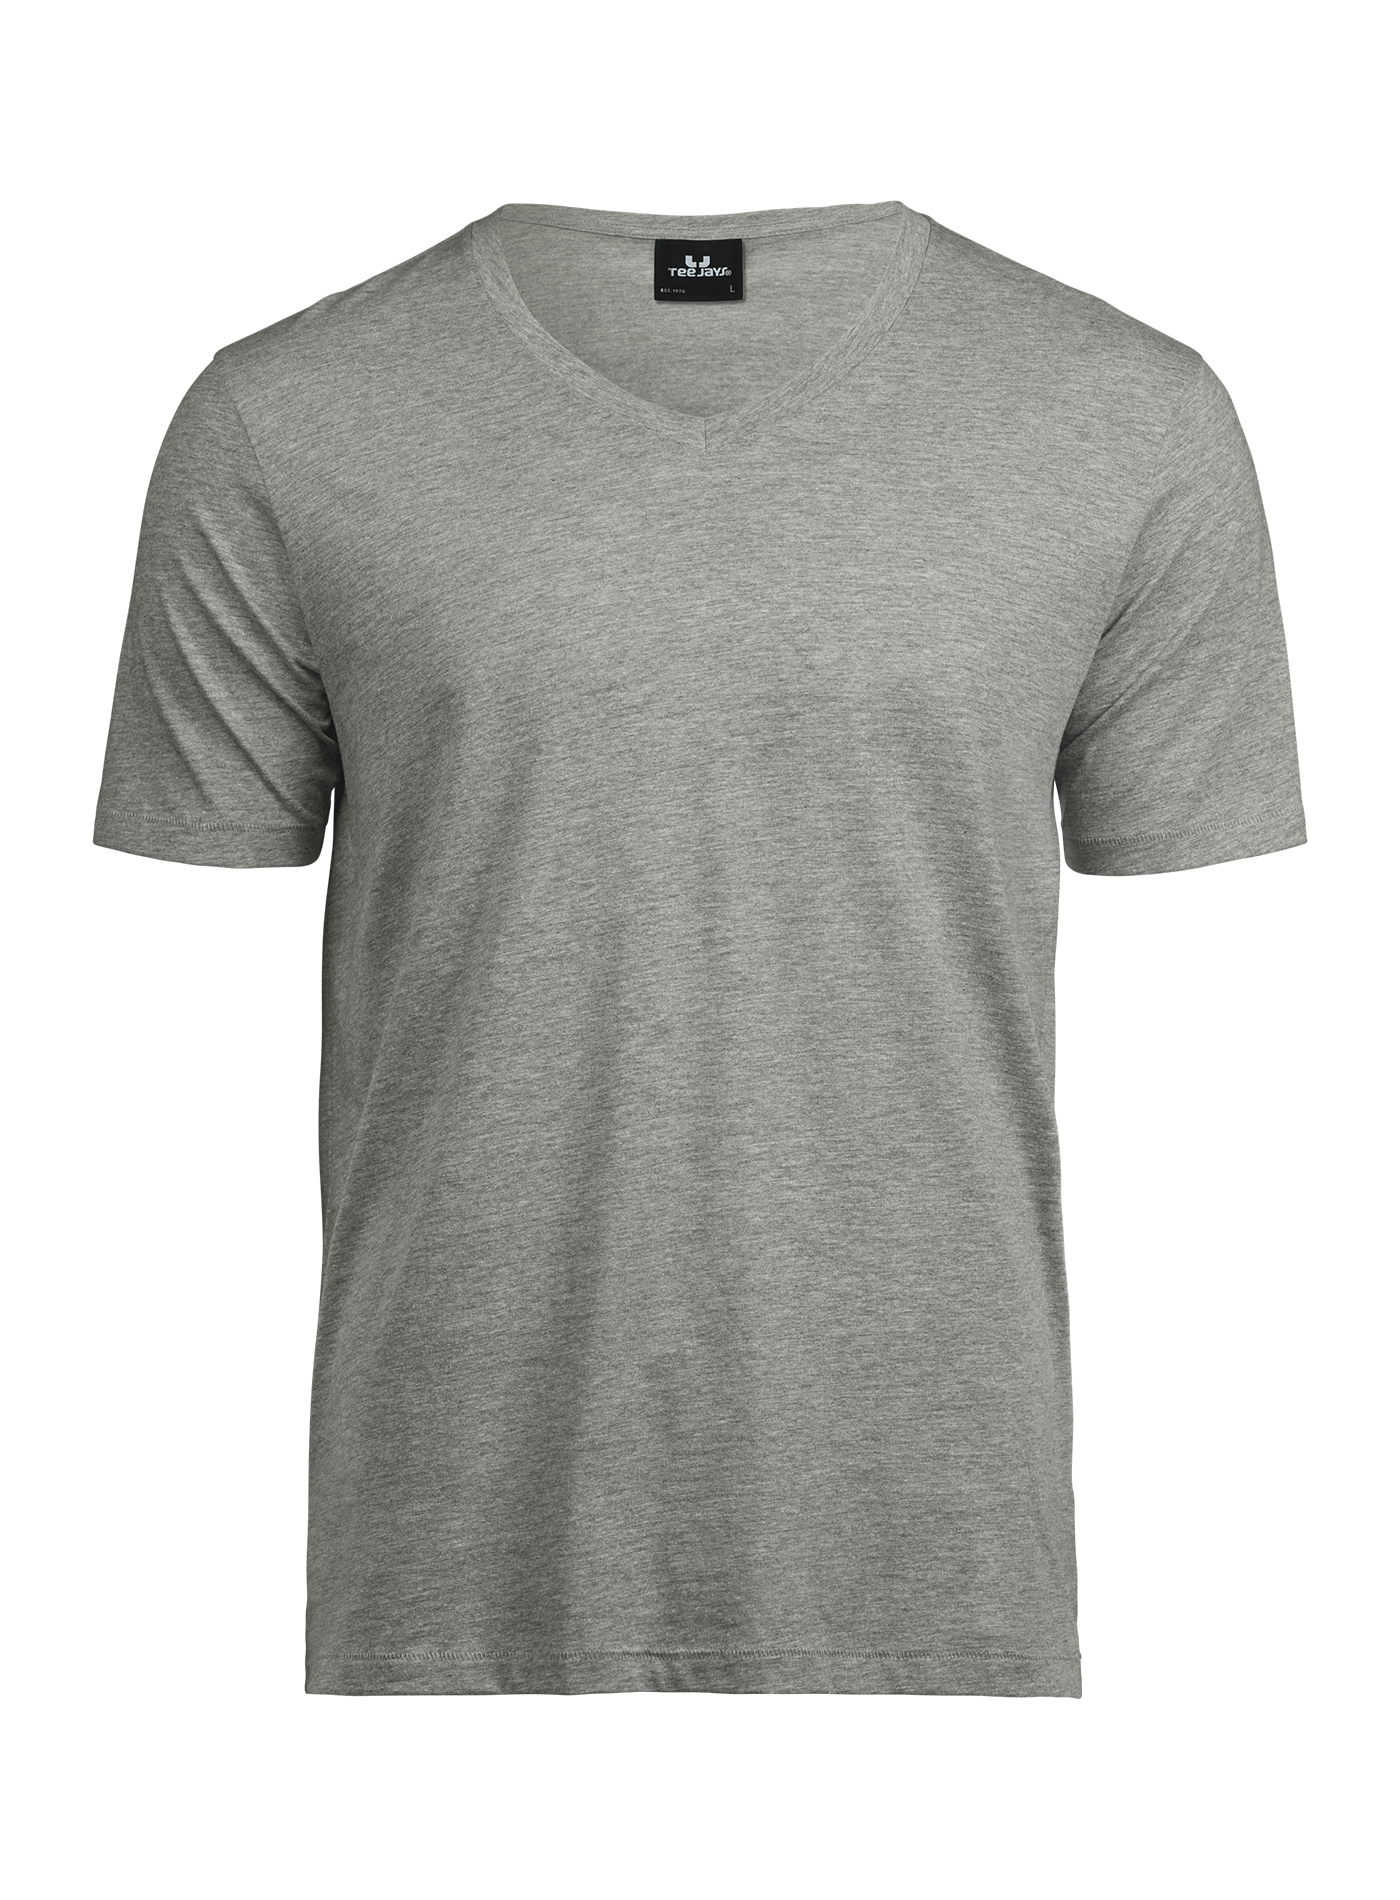 Pánské tričko s výstřihem do V Tee Jays - šedý melír XXL